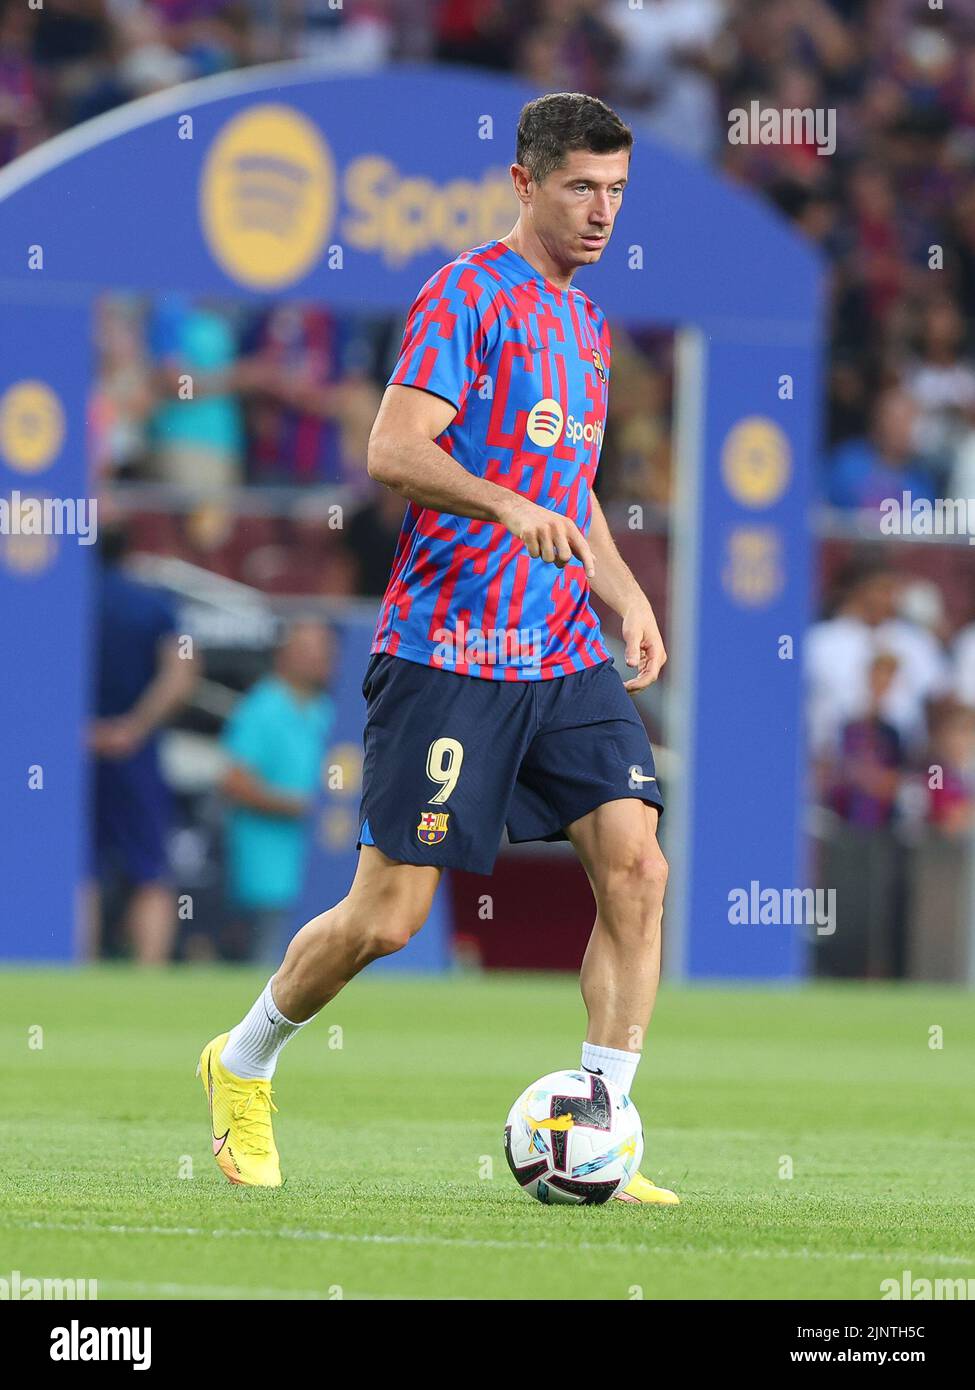 Robert Lewandowski of FC Barcelona during the Liga match between FC Barcelona and Rayo Vallecano at Spotify Camp Nou in Barcelona, Spain. Stock Photo